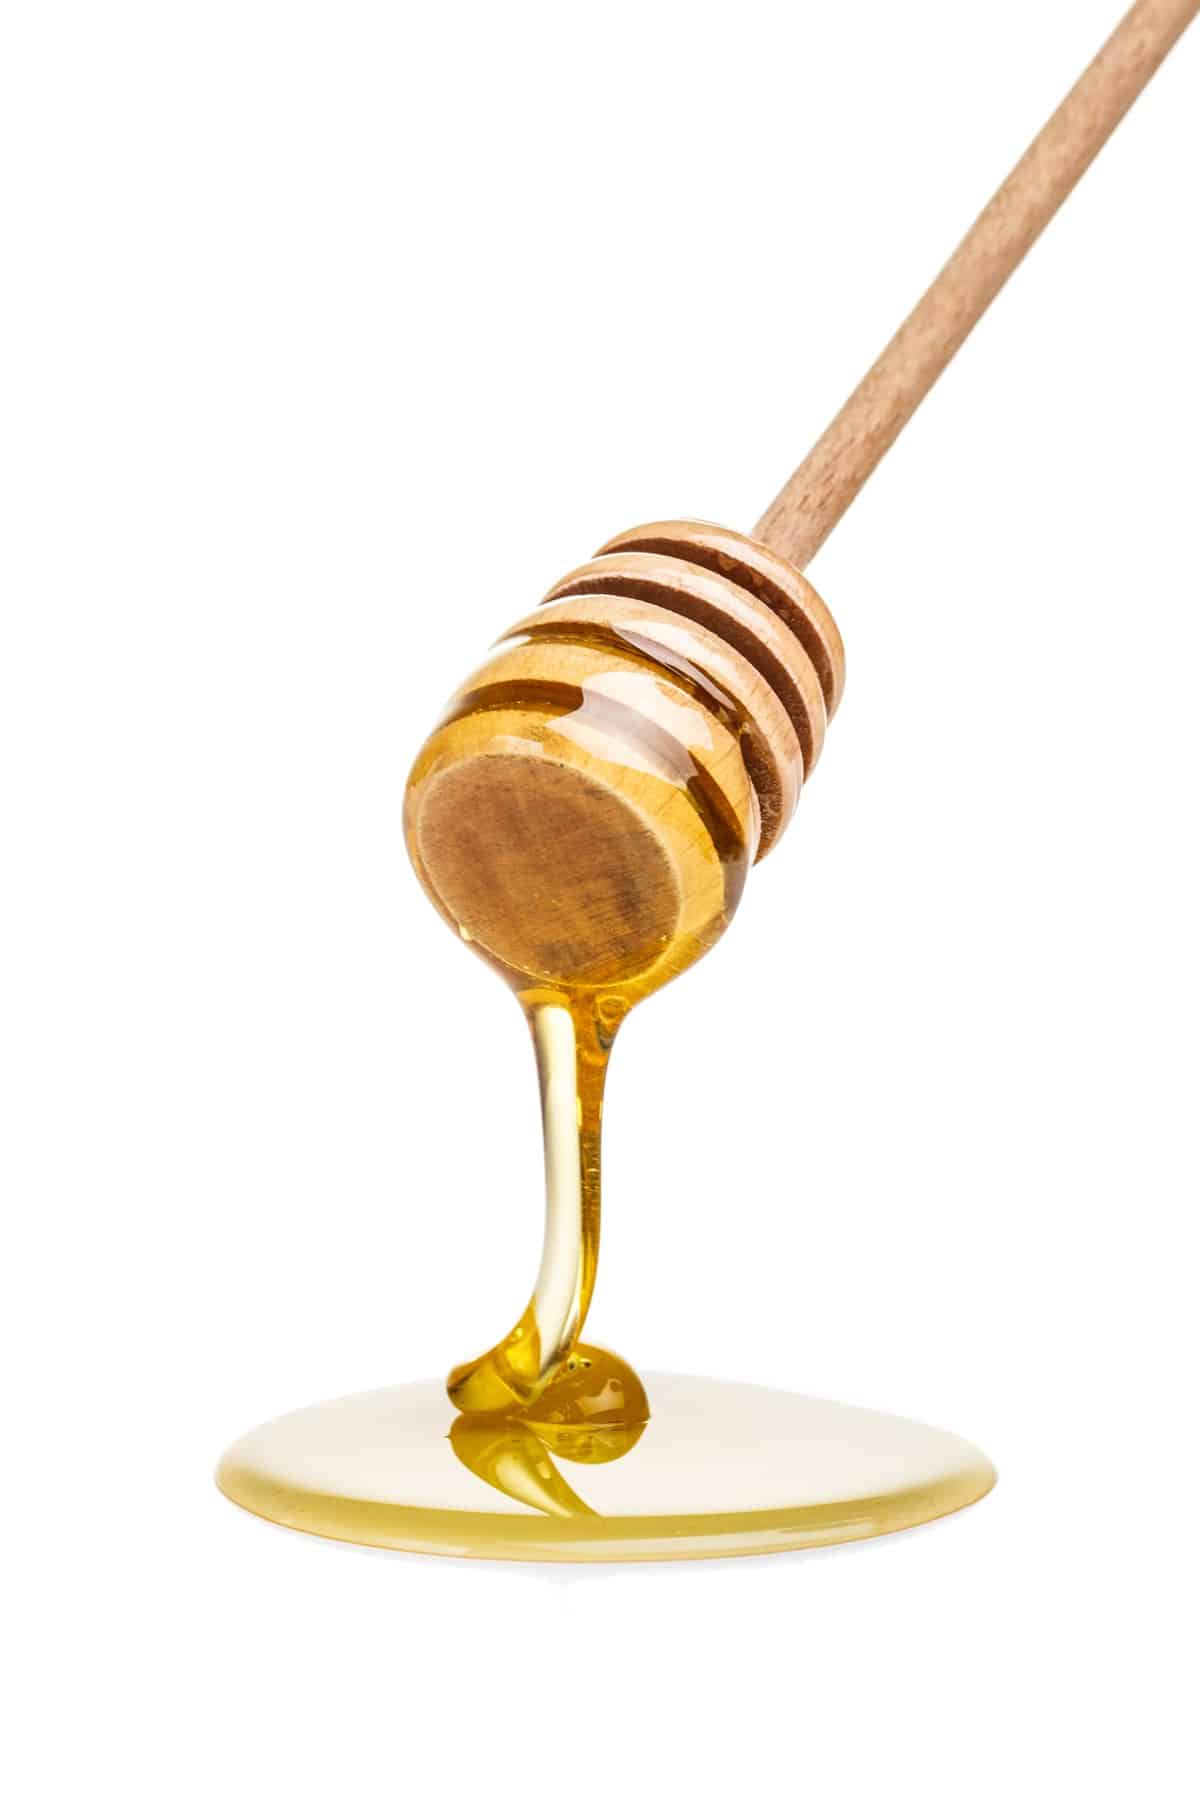 Honey on a wood dipper. 